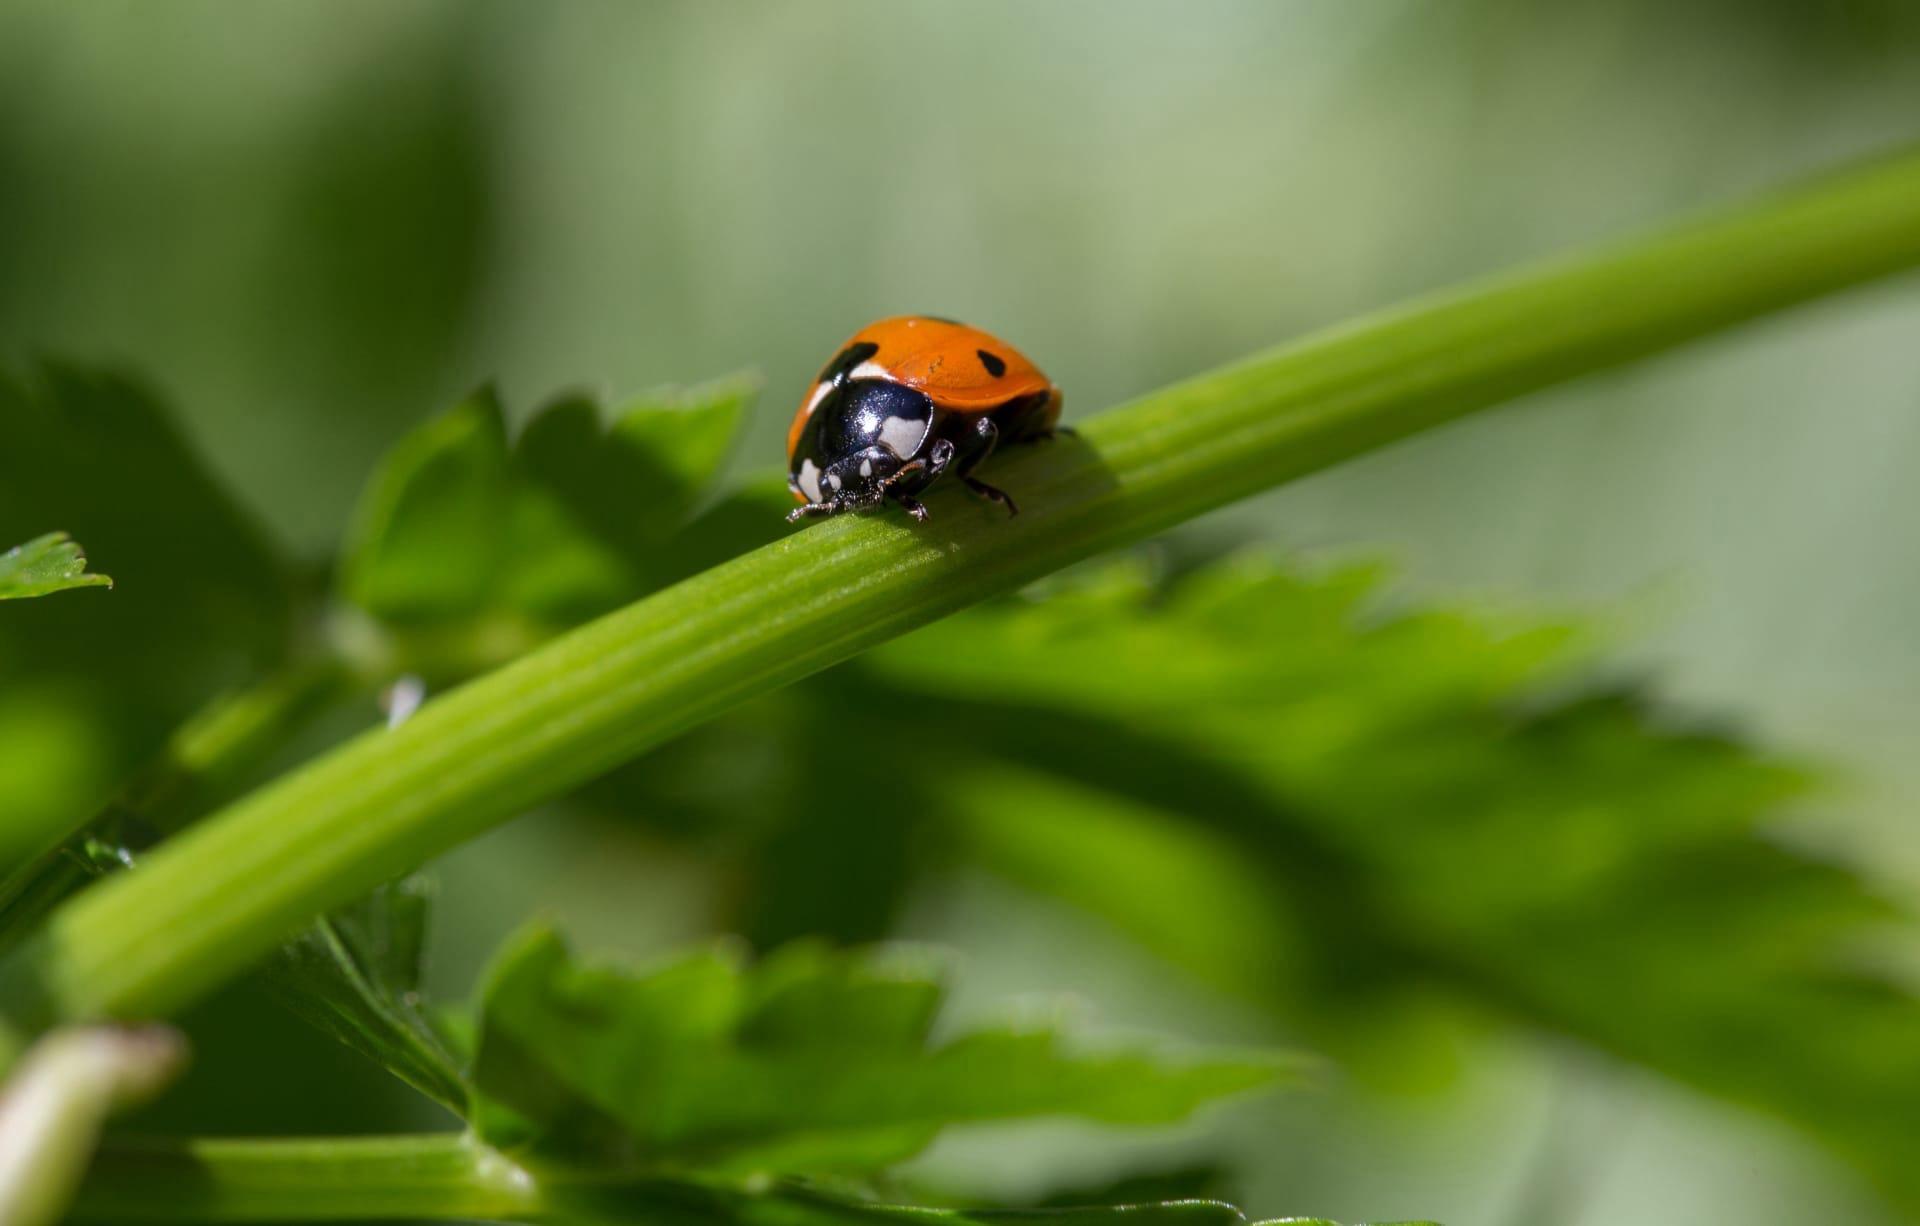 Ladybug pictures